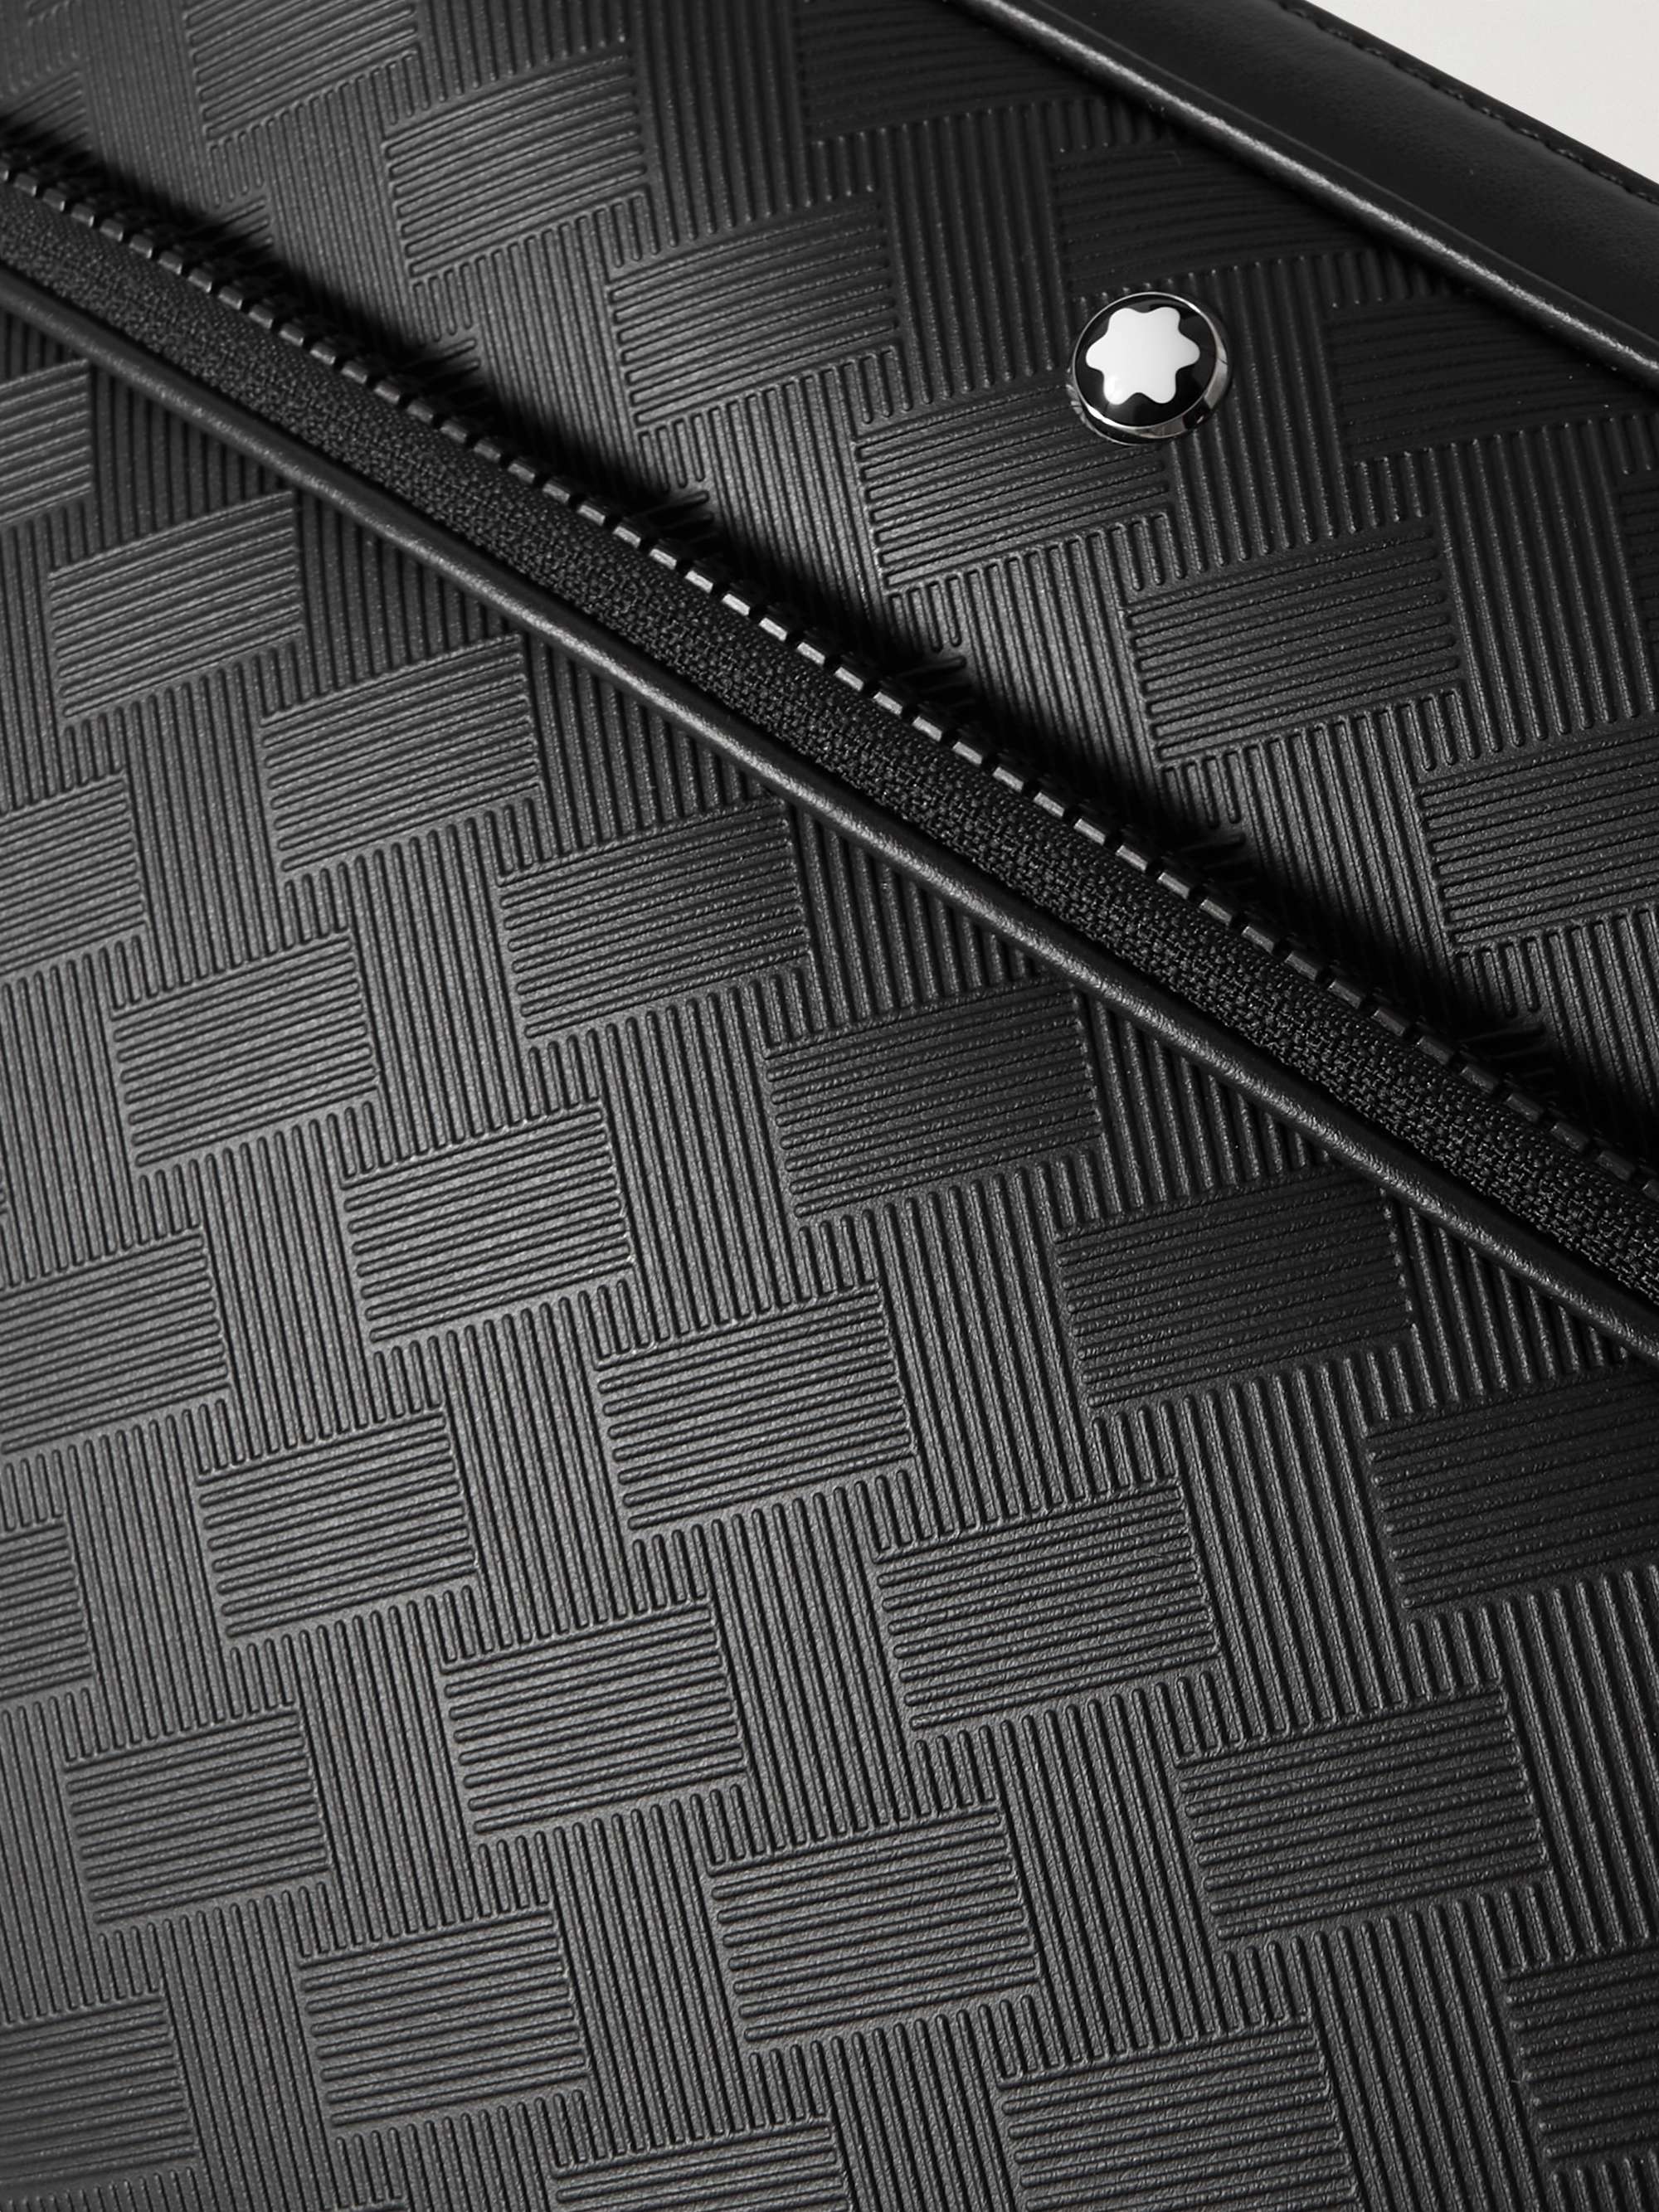 MONTBLANC Extreme 3.0 Cross-Grain Leather Messenger Bag